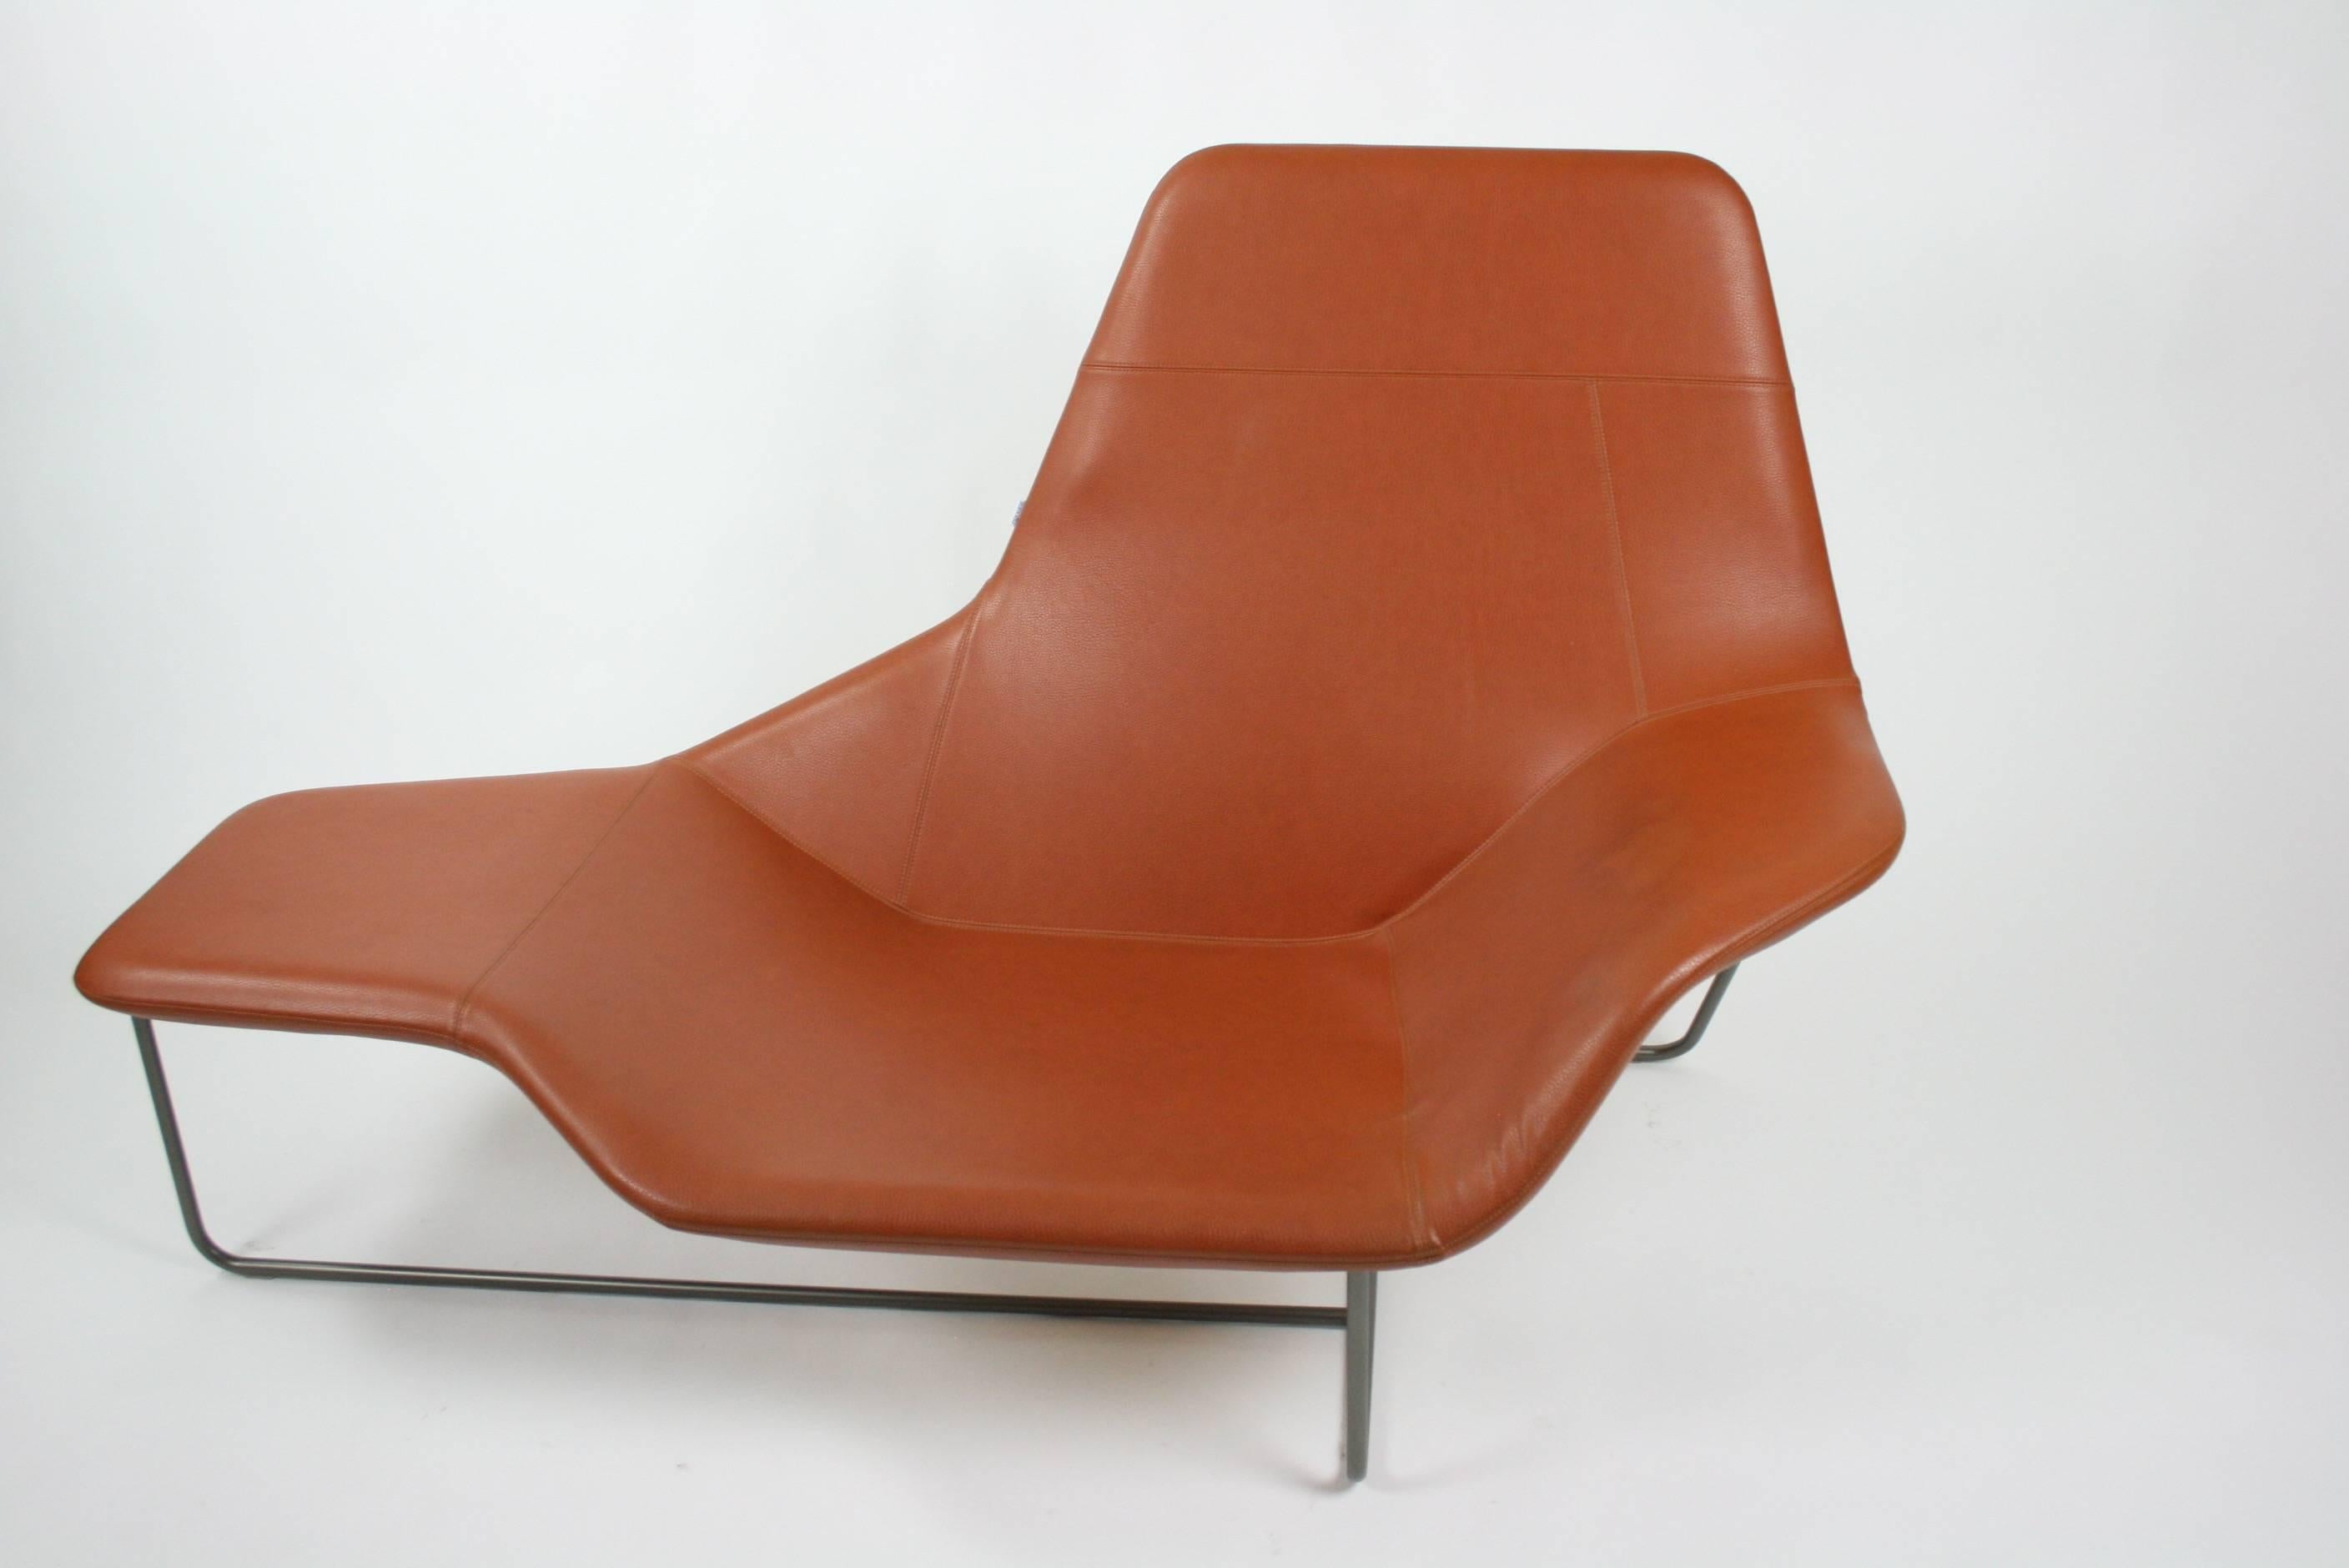 Modern Zanotta Lama Chaise Lounge Chair Designed by Ludovica and Roberto Palomba